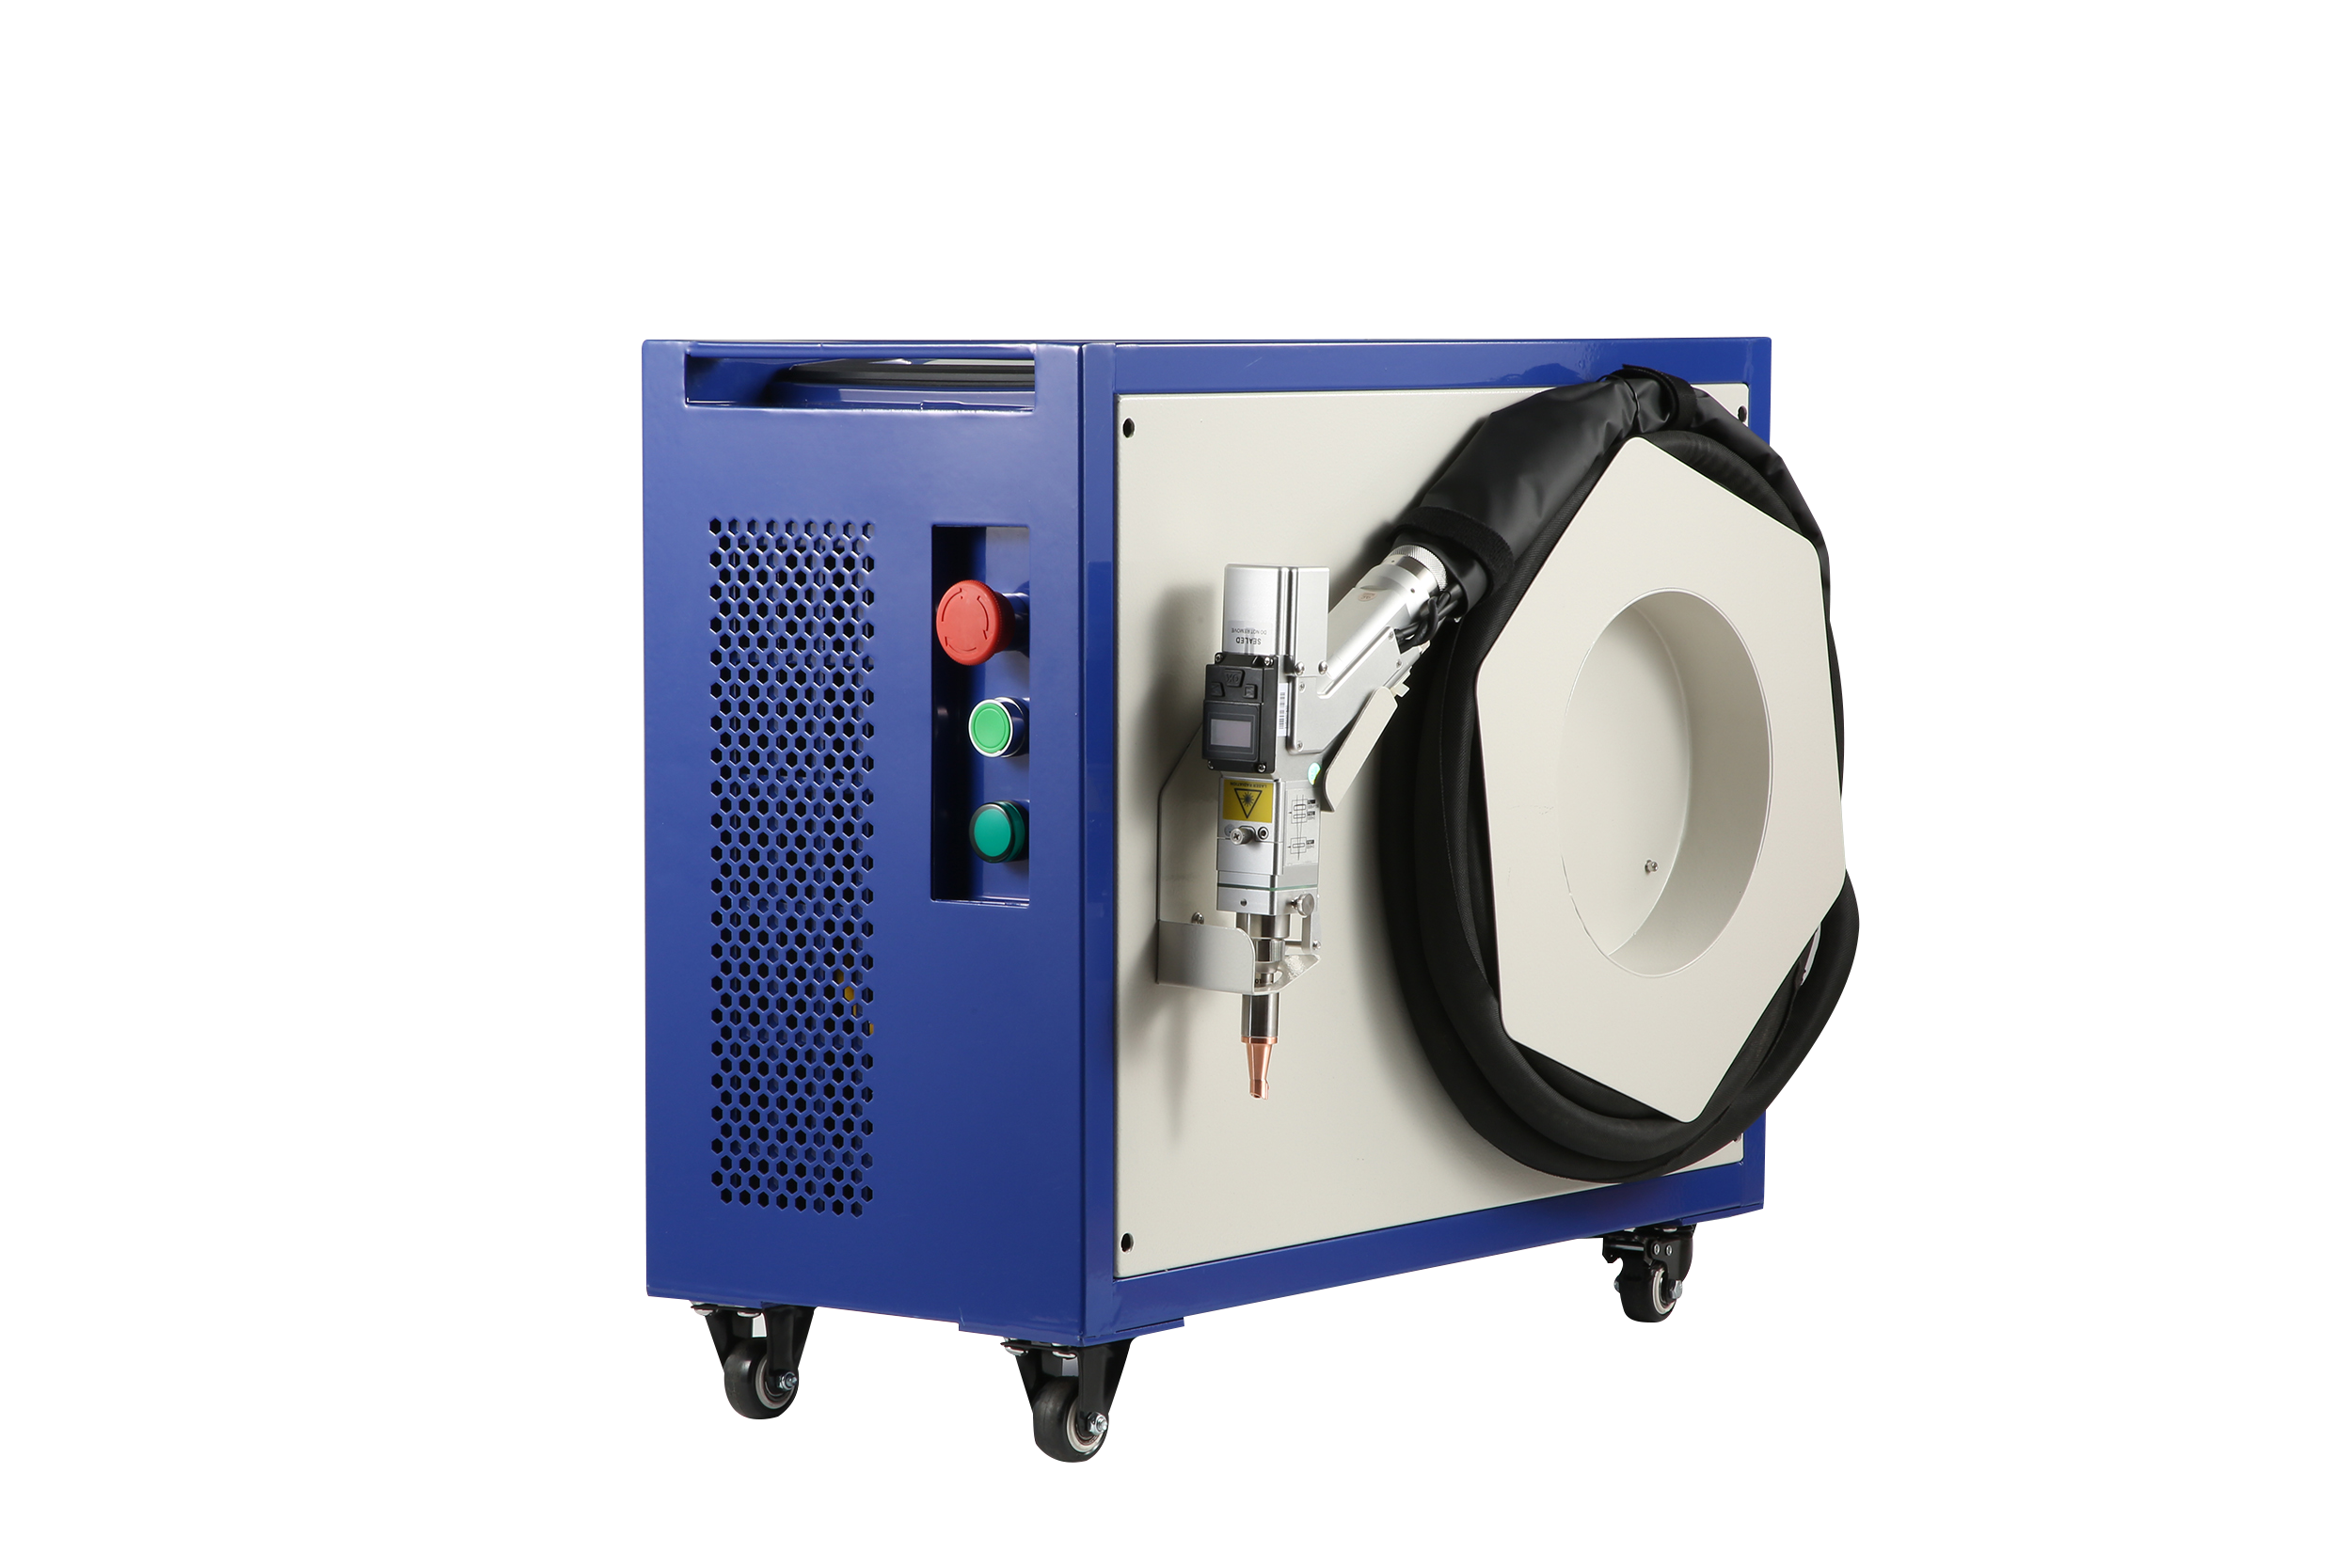 ComWelder B2 1500W Air cooling handheld Laser Welding Machine